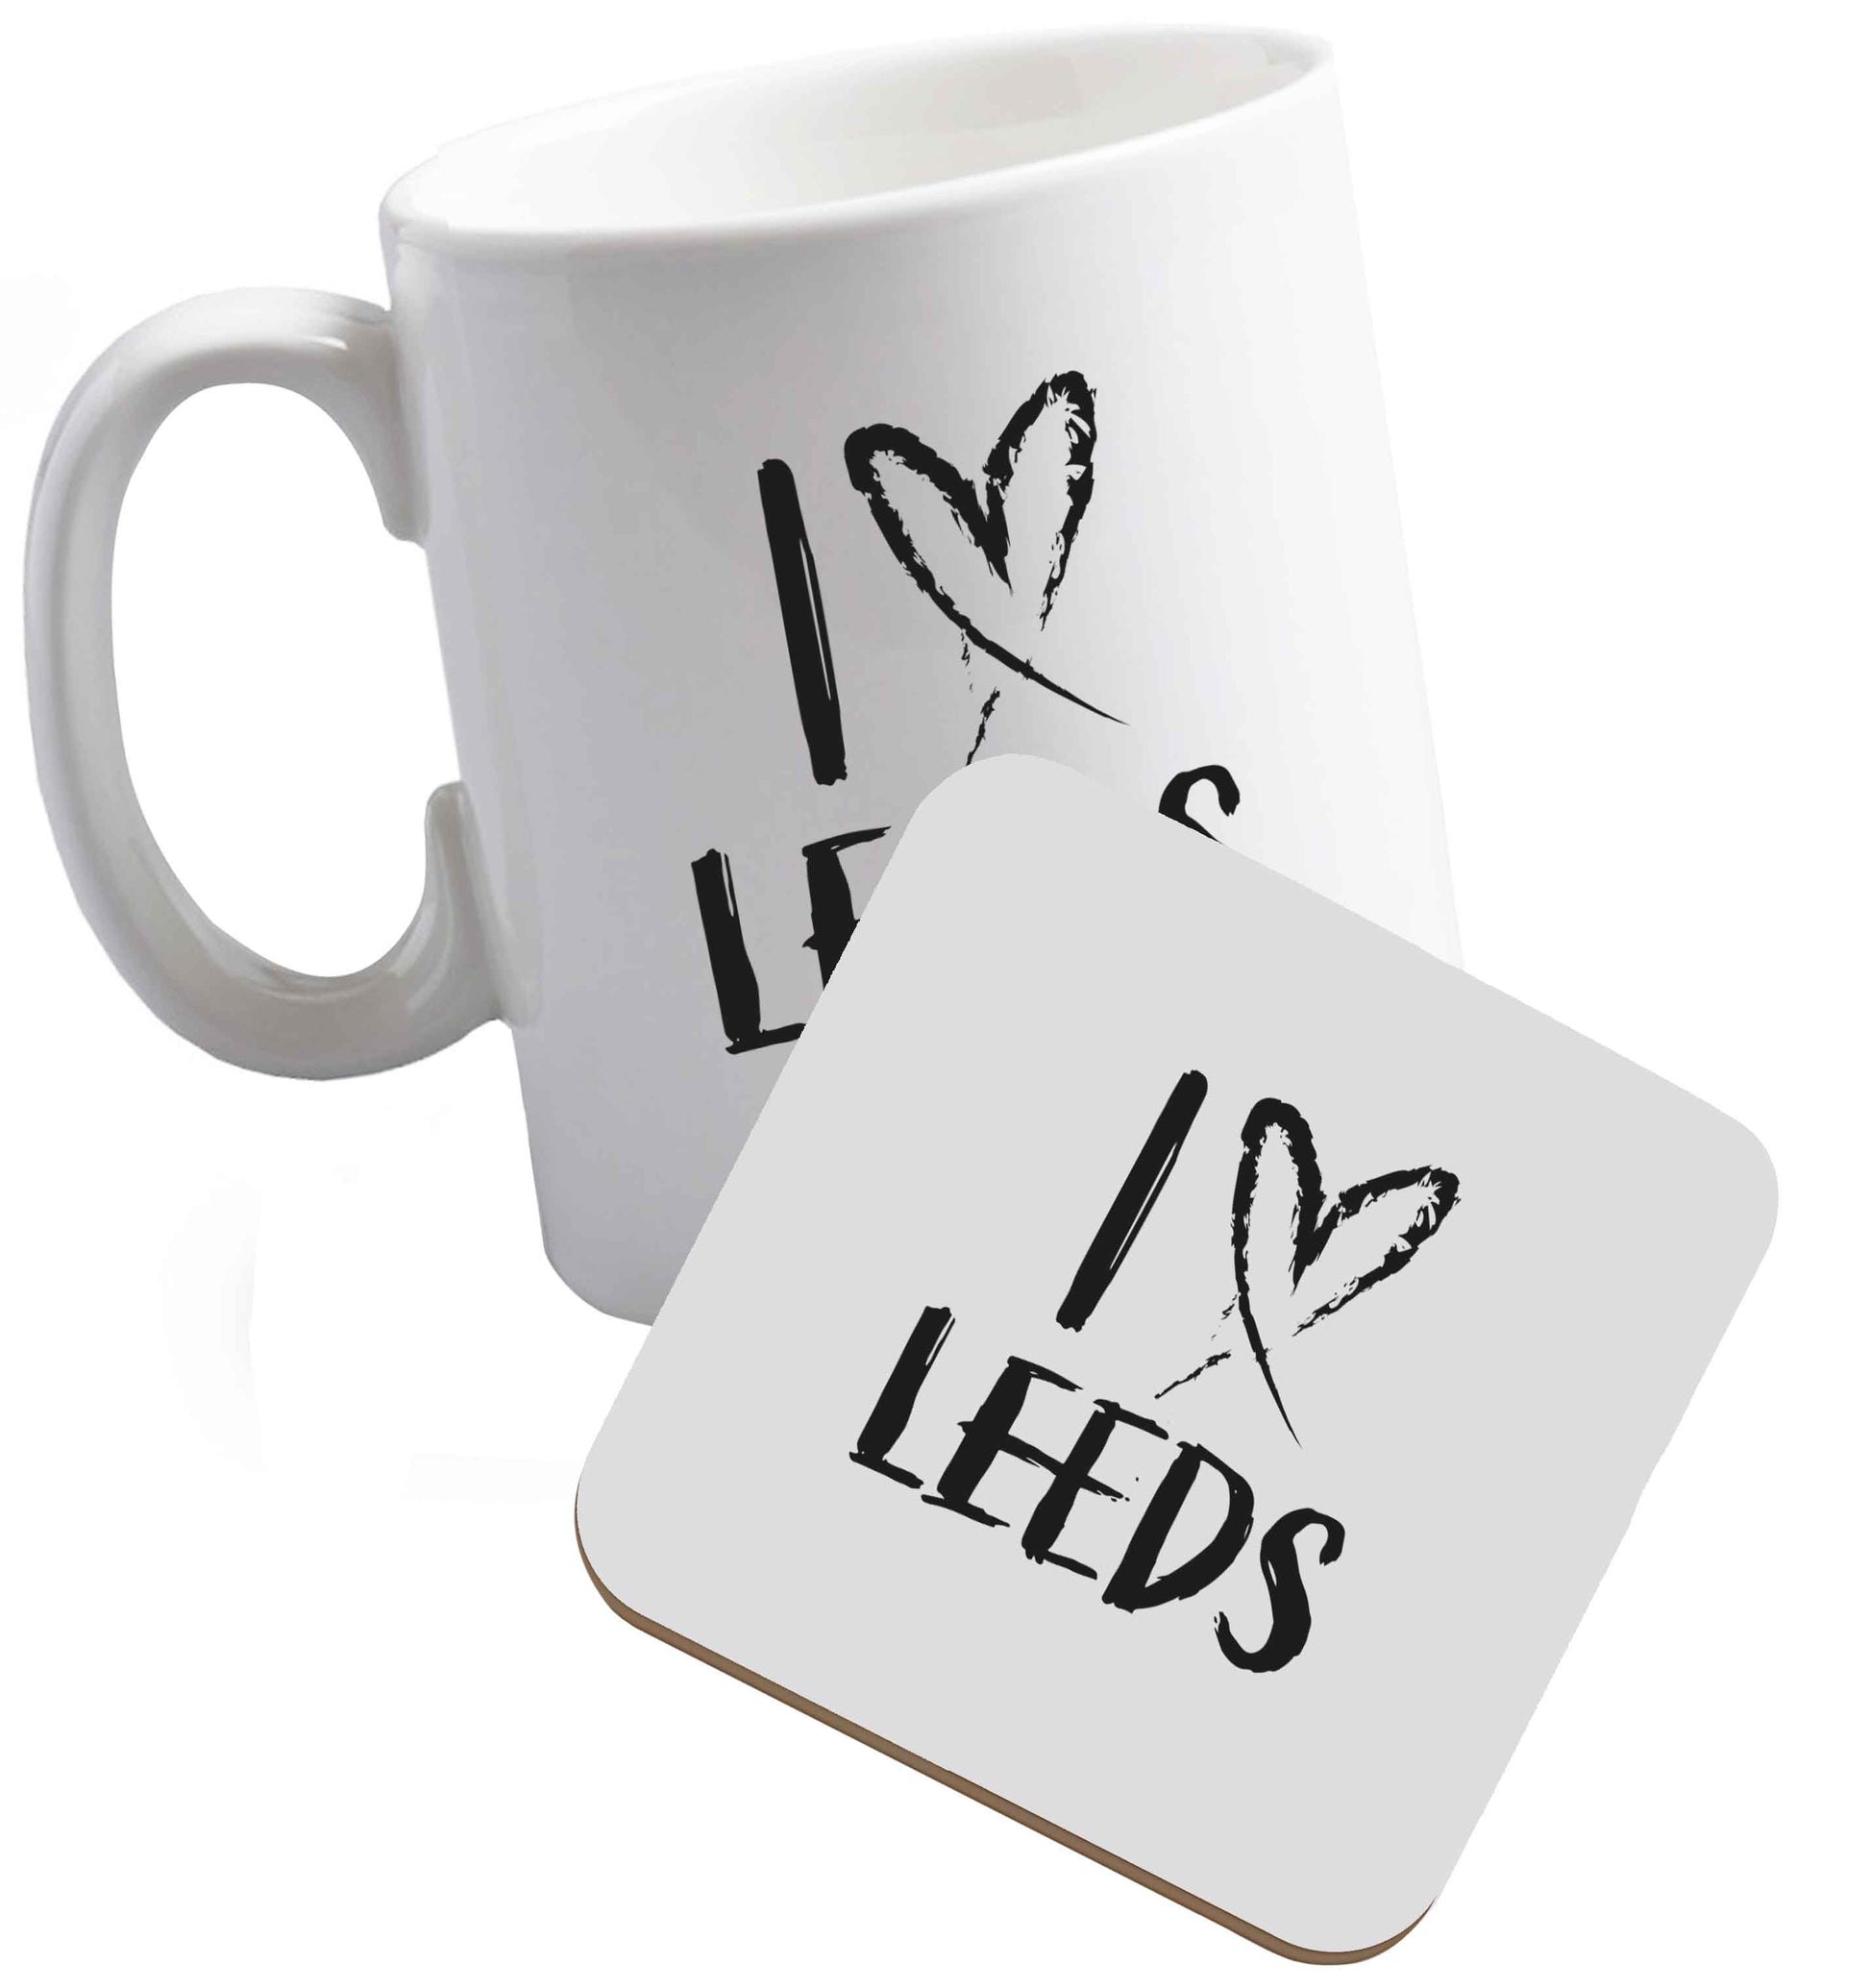 10 oz I love Leeds ceramic mug and coaster set right handed